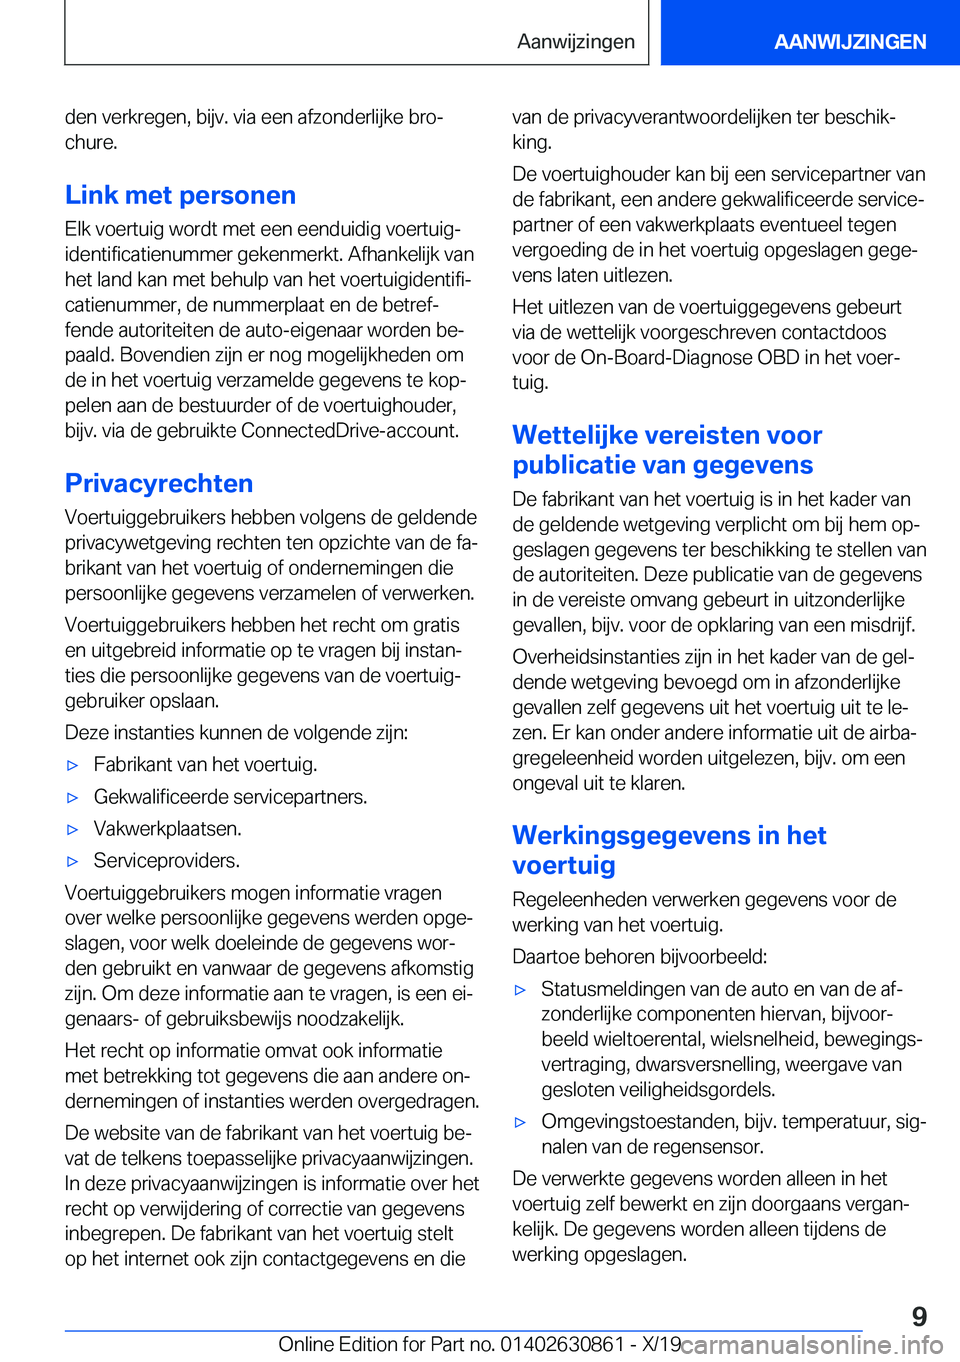 BMW 4 SERIES GRAN COUPE 2020  Instructieboekjes (in Dutch) �d�e�n��v�e�r�k�r�e�g�e�n�,��b�i�j�v�.��v�i�a��e�e�n��a�f�z�o�n�d�e�r�l�i�j�k�e��b�r�oj
�c�h�u�r�e�.
�L�i�n�k��m�e�t��p�e�r�s�o�n�e�n�E�l�k��v�o�e�r�t�u�i�g��w�o�r�d�t��m�e�t��e�e�n��e�e